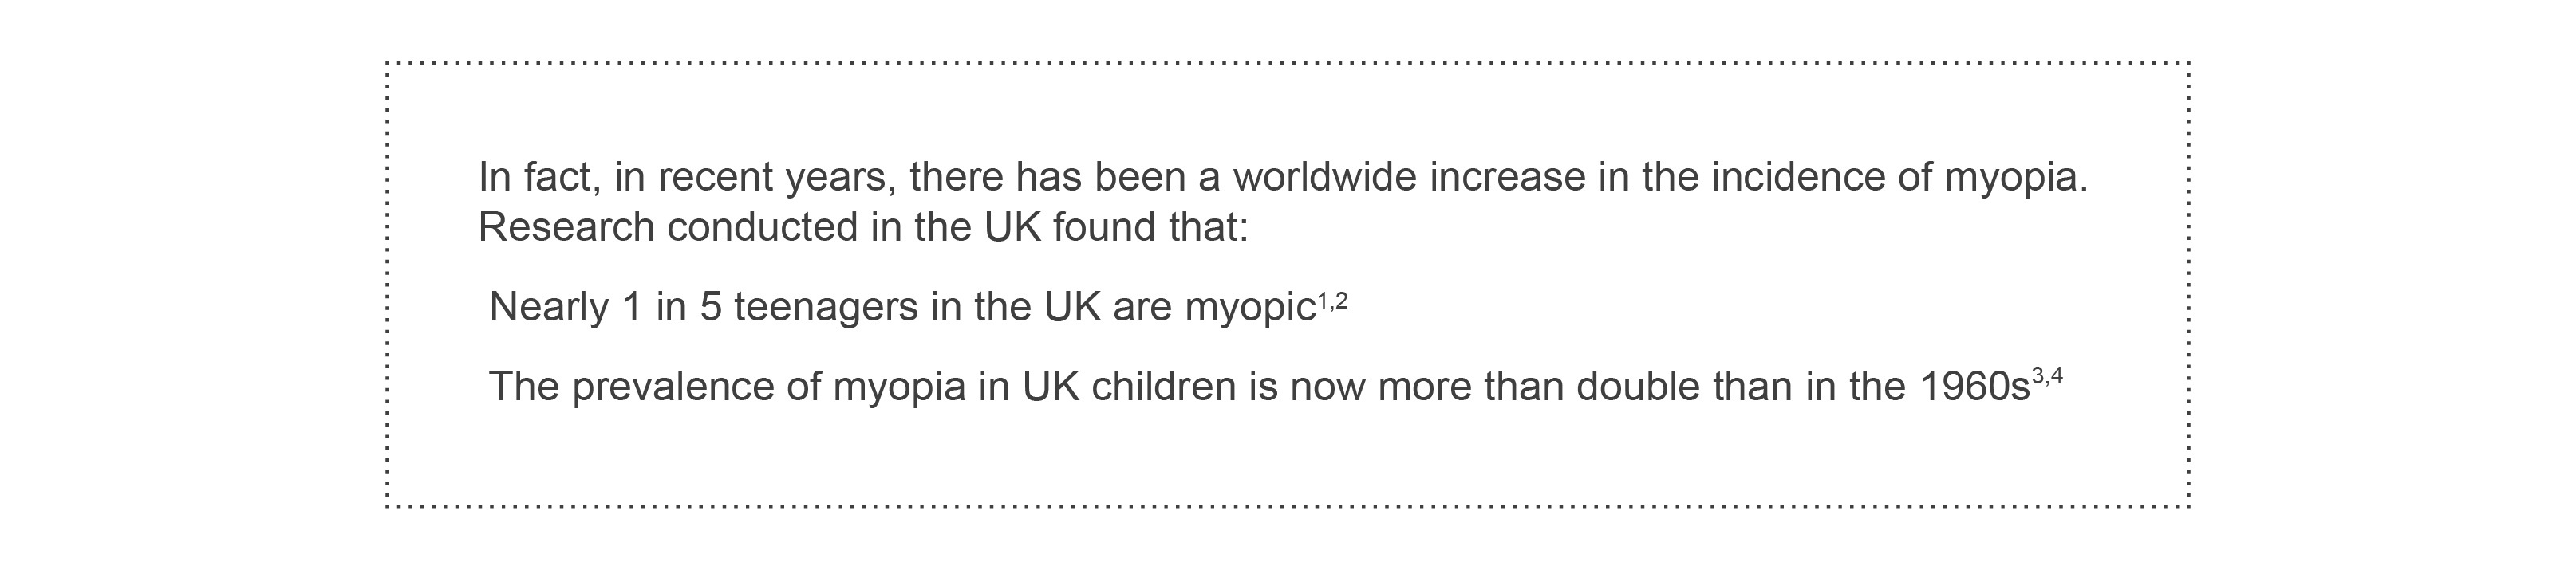 Myopia Facts